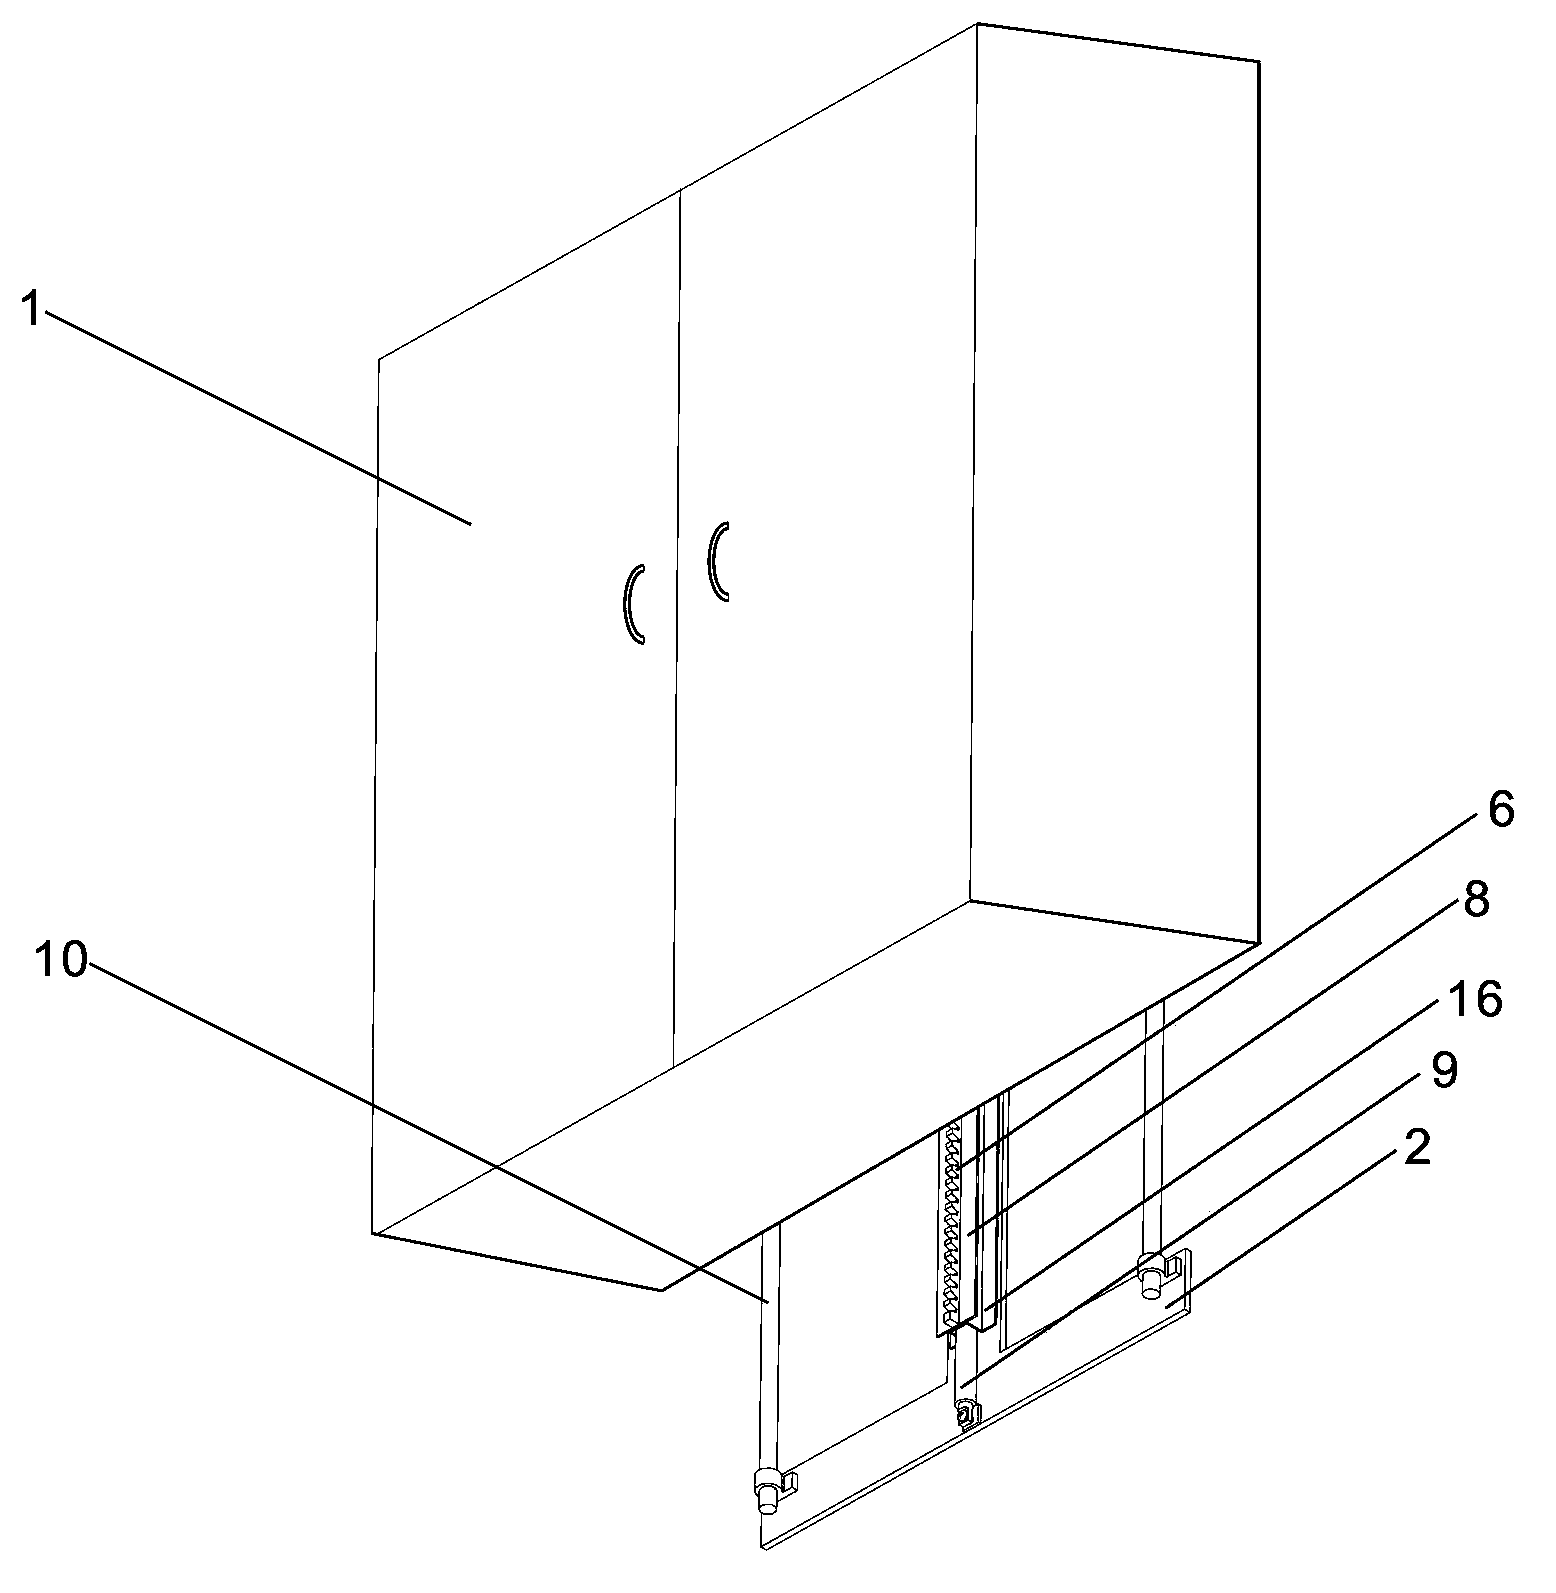 Lift-type cabinet